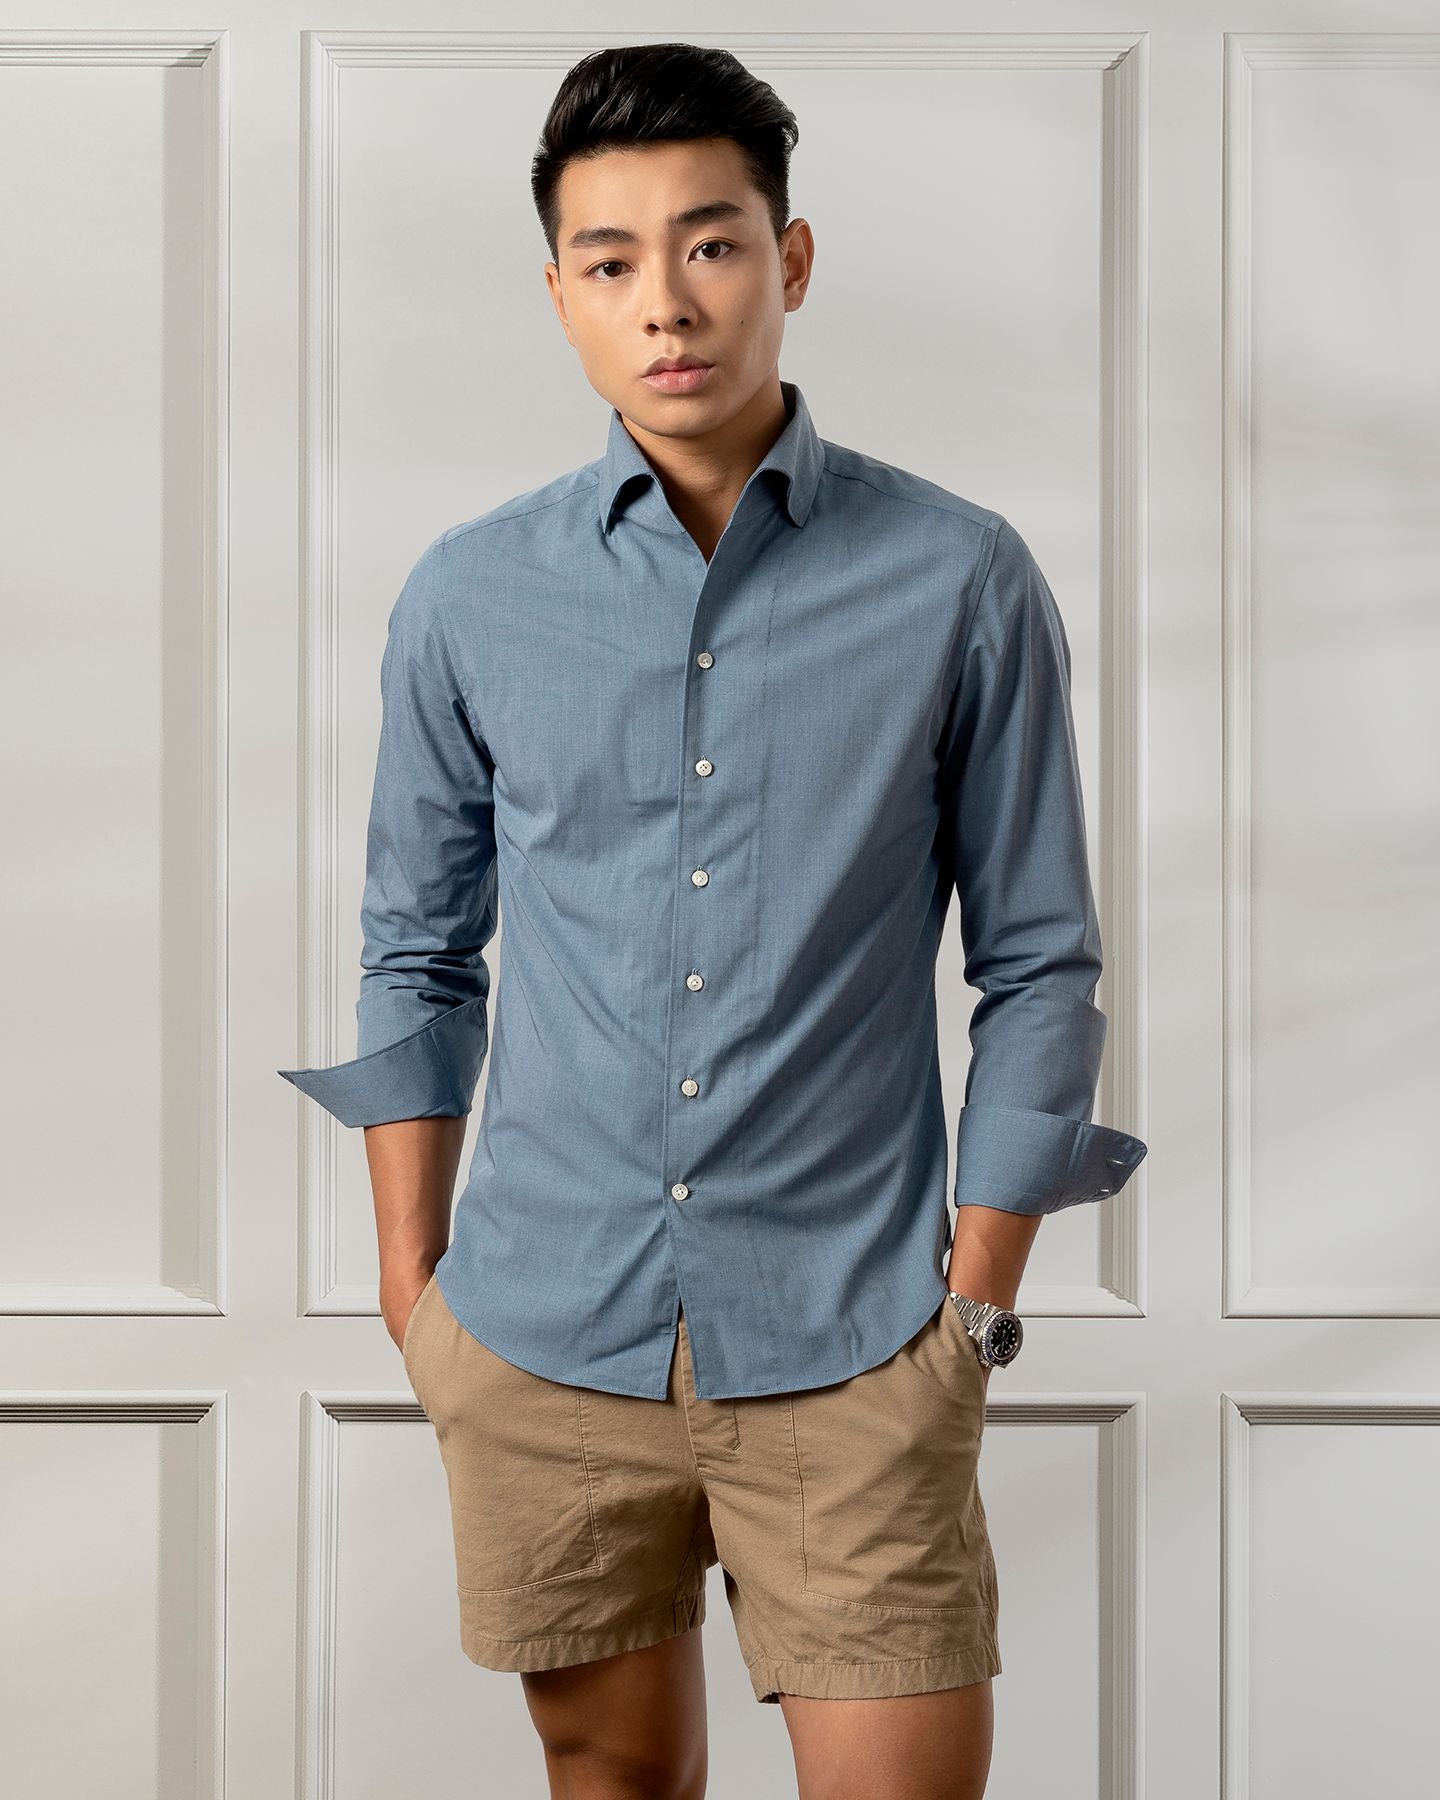 ESQ | The Bamboo Shirt & Bespoke Menswear